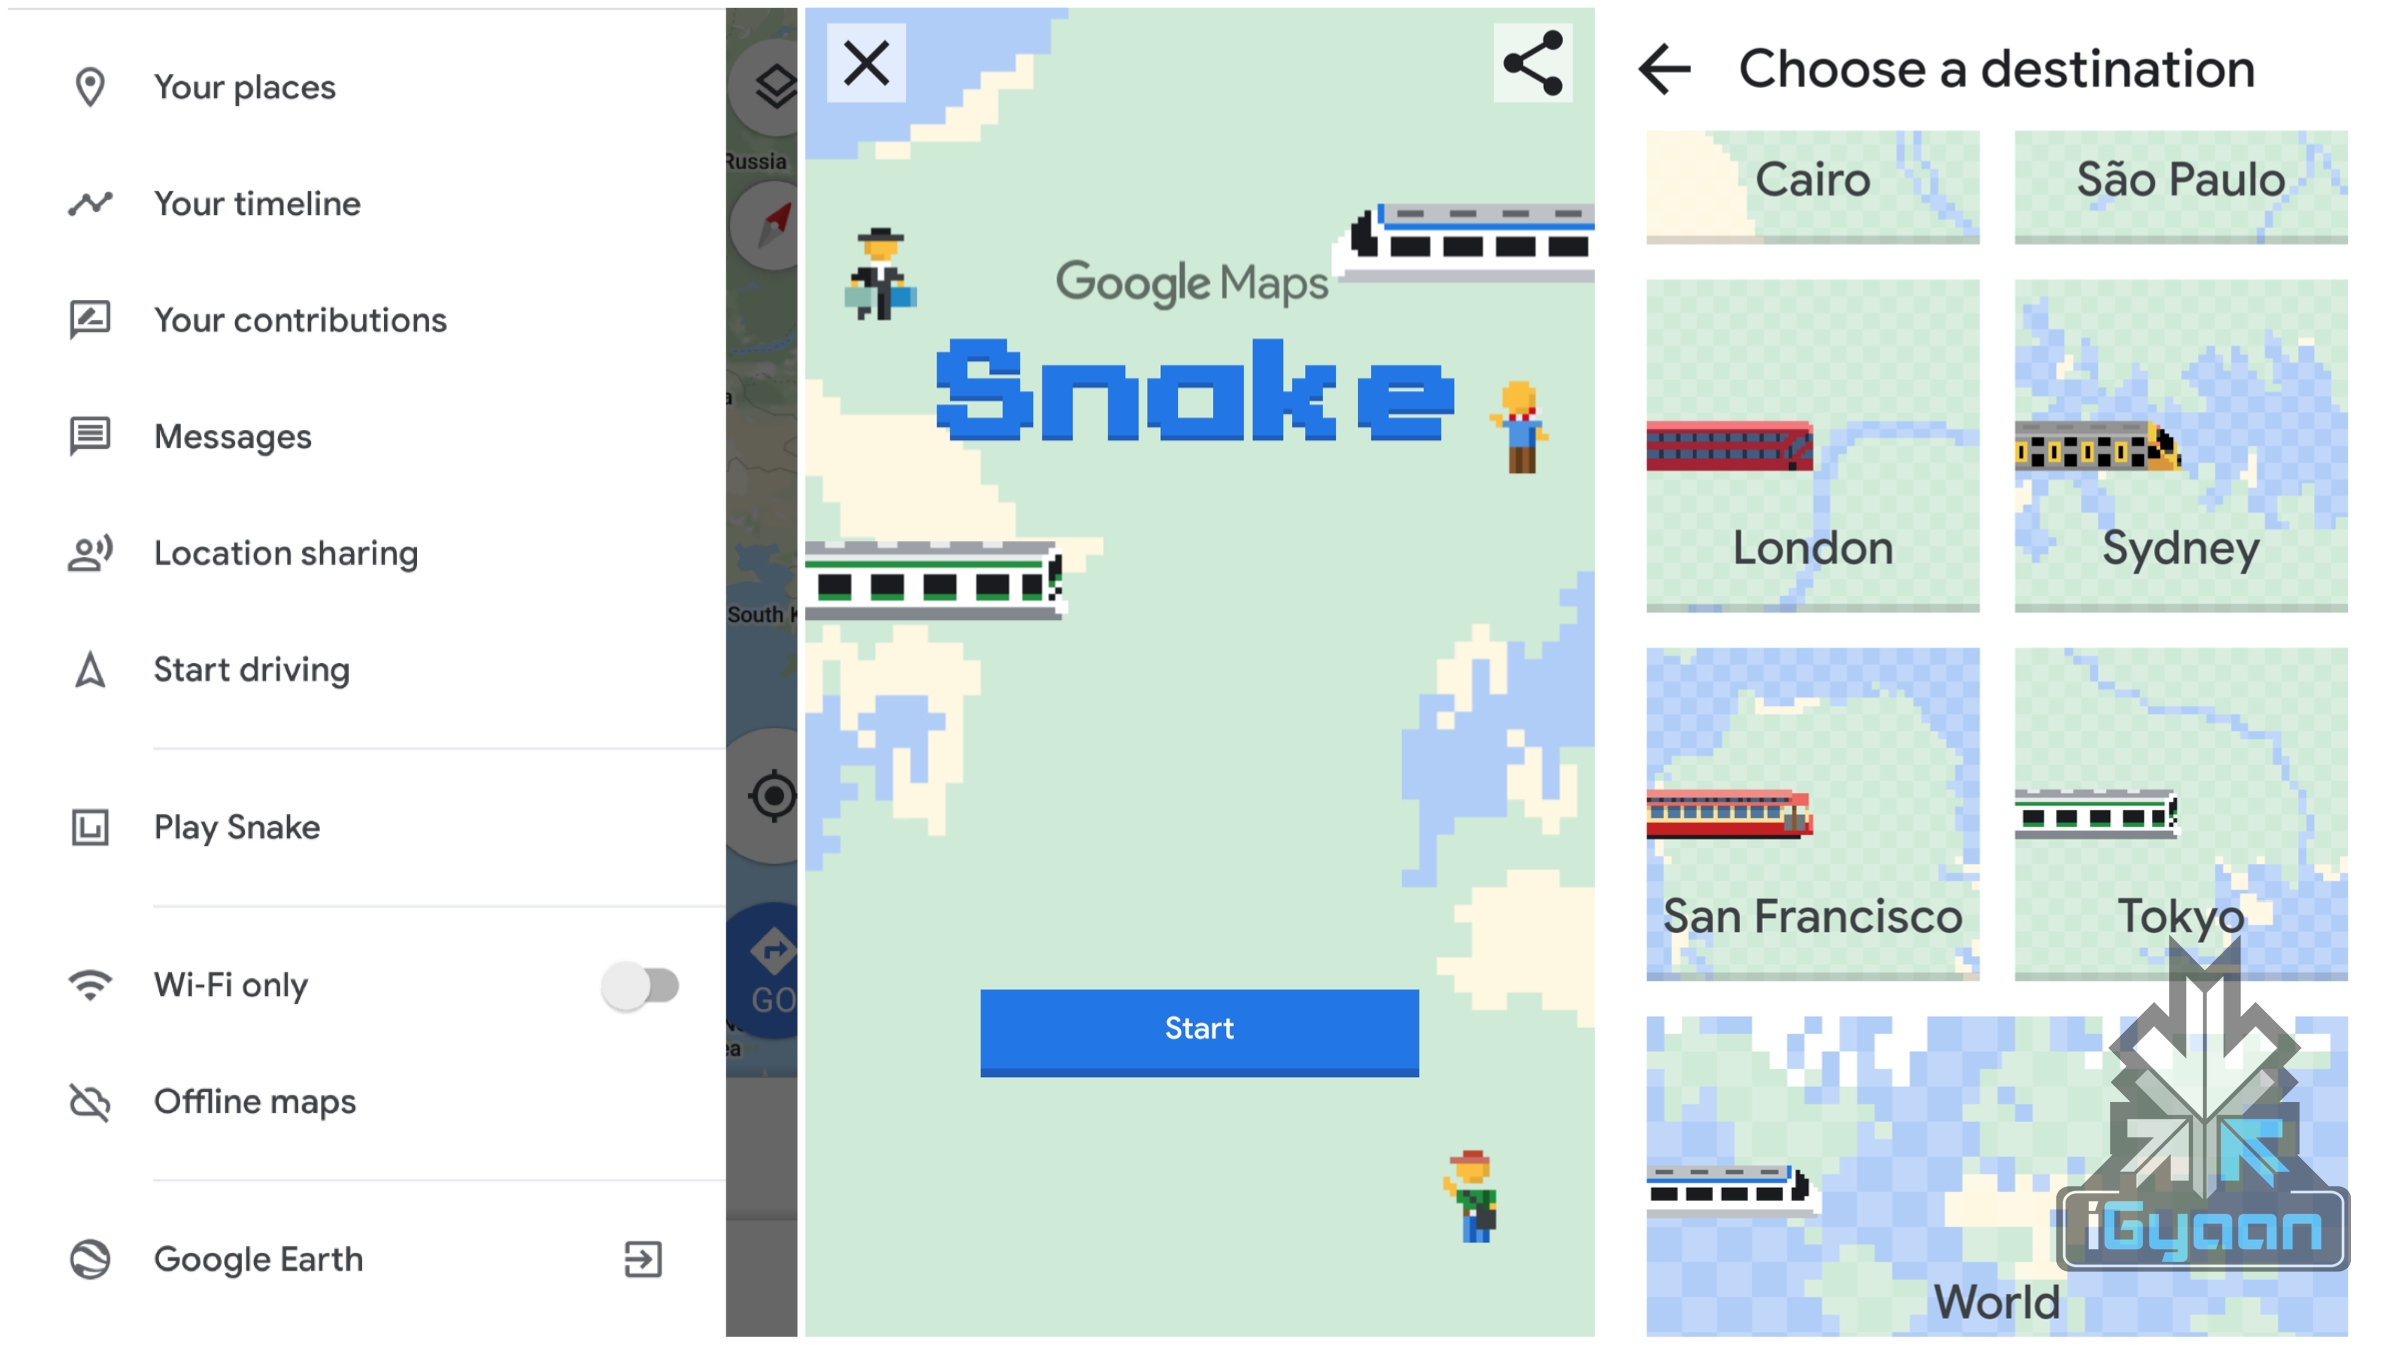 Google Maps Brings Back 'Snake' Game 